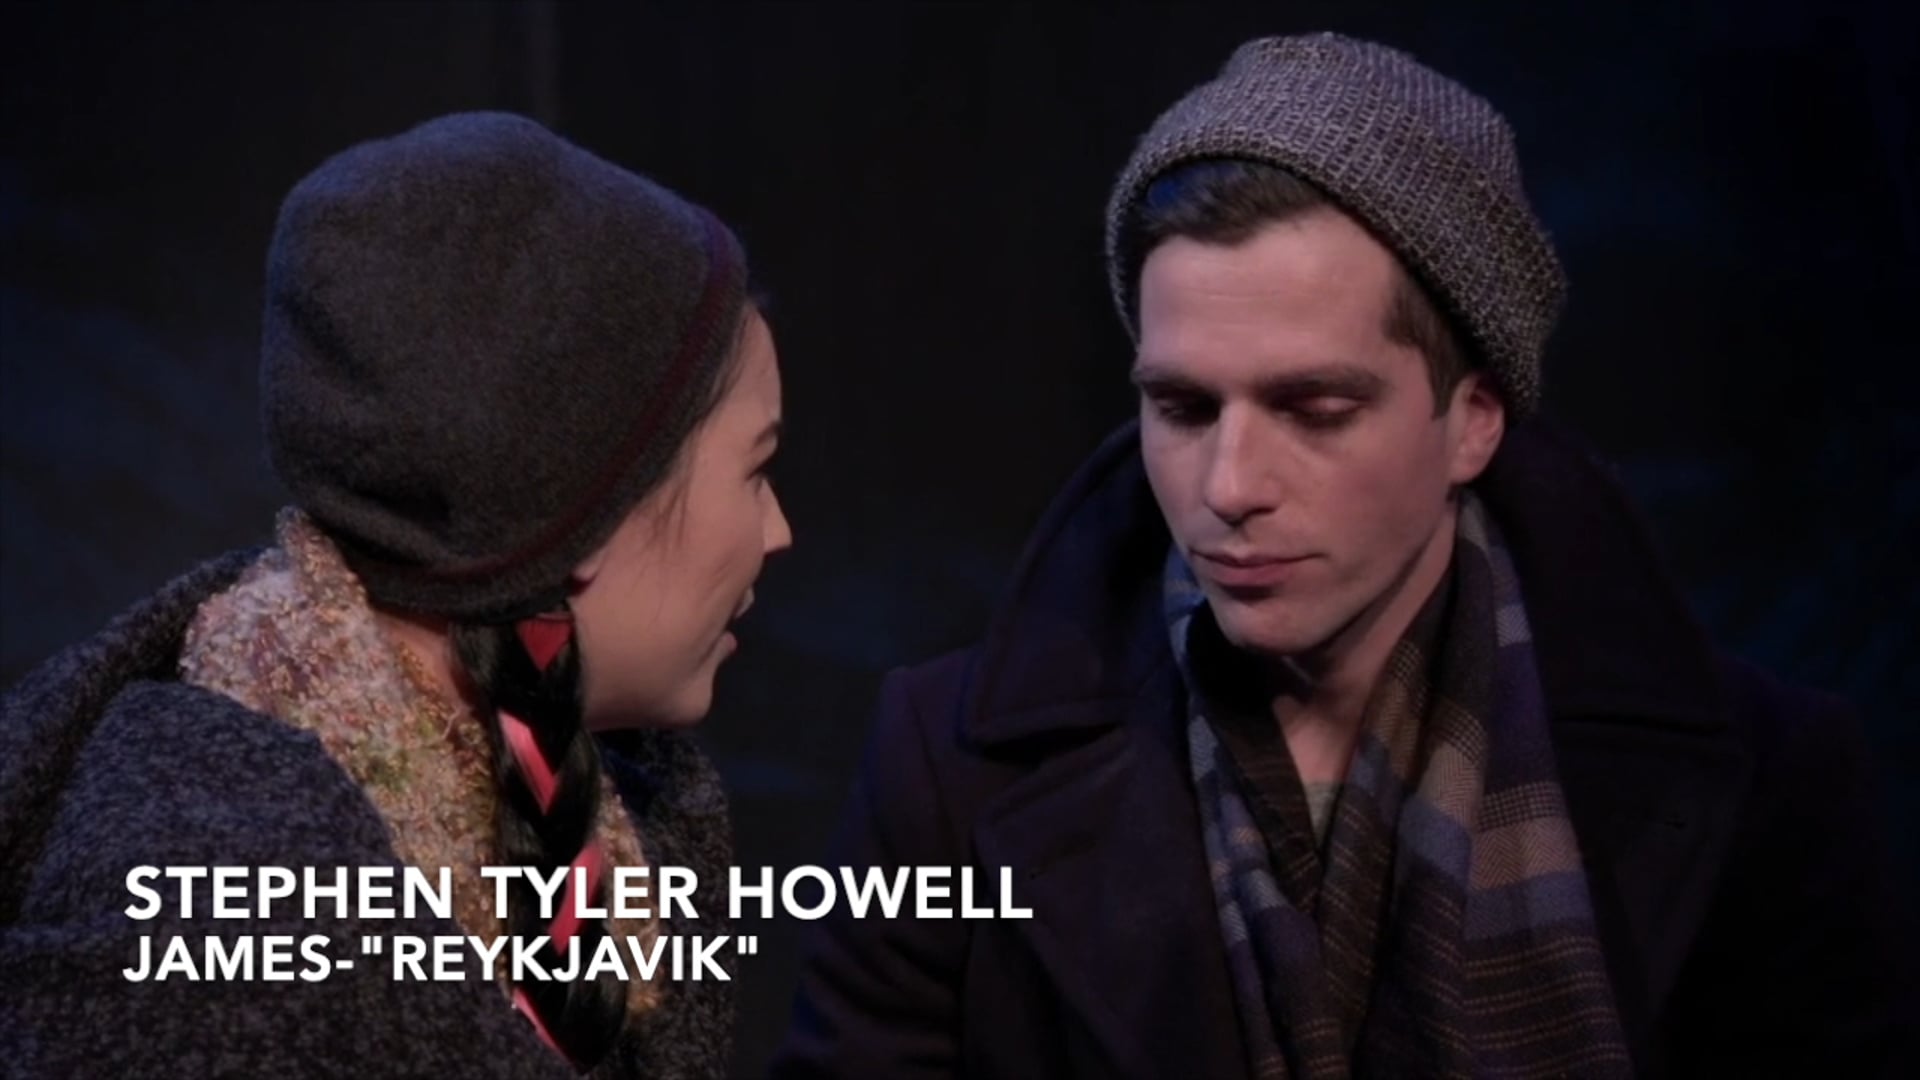 Stephen Tyler Howell as JAMES in "Reykjavik"